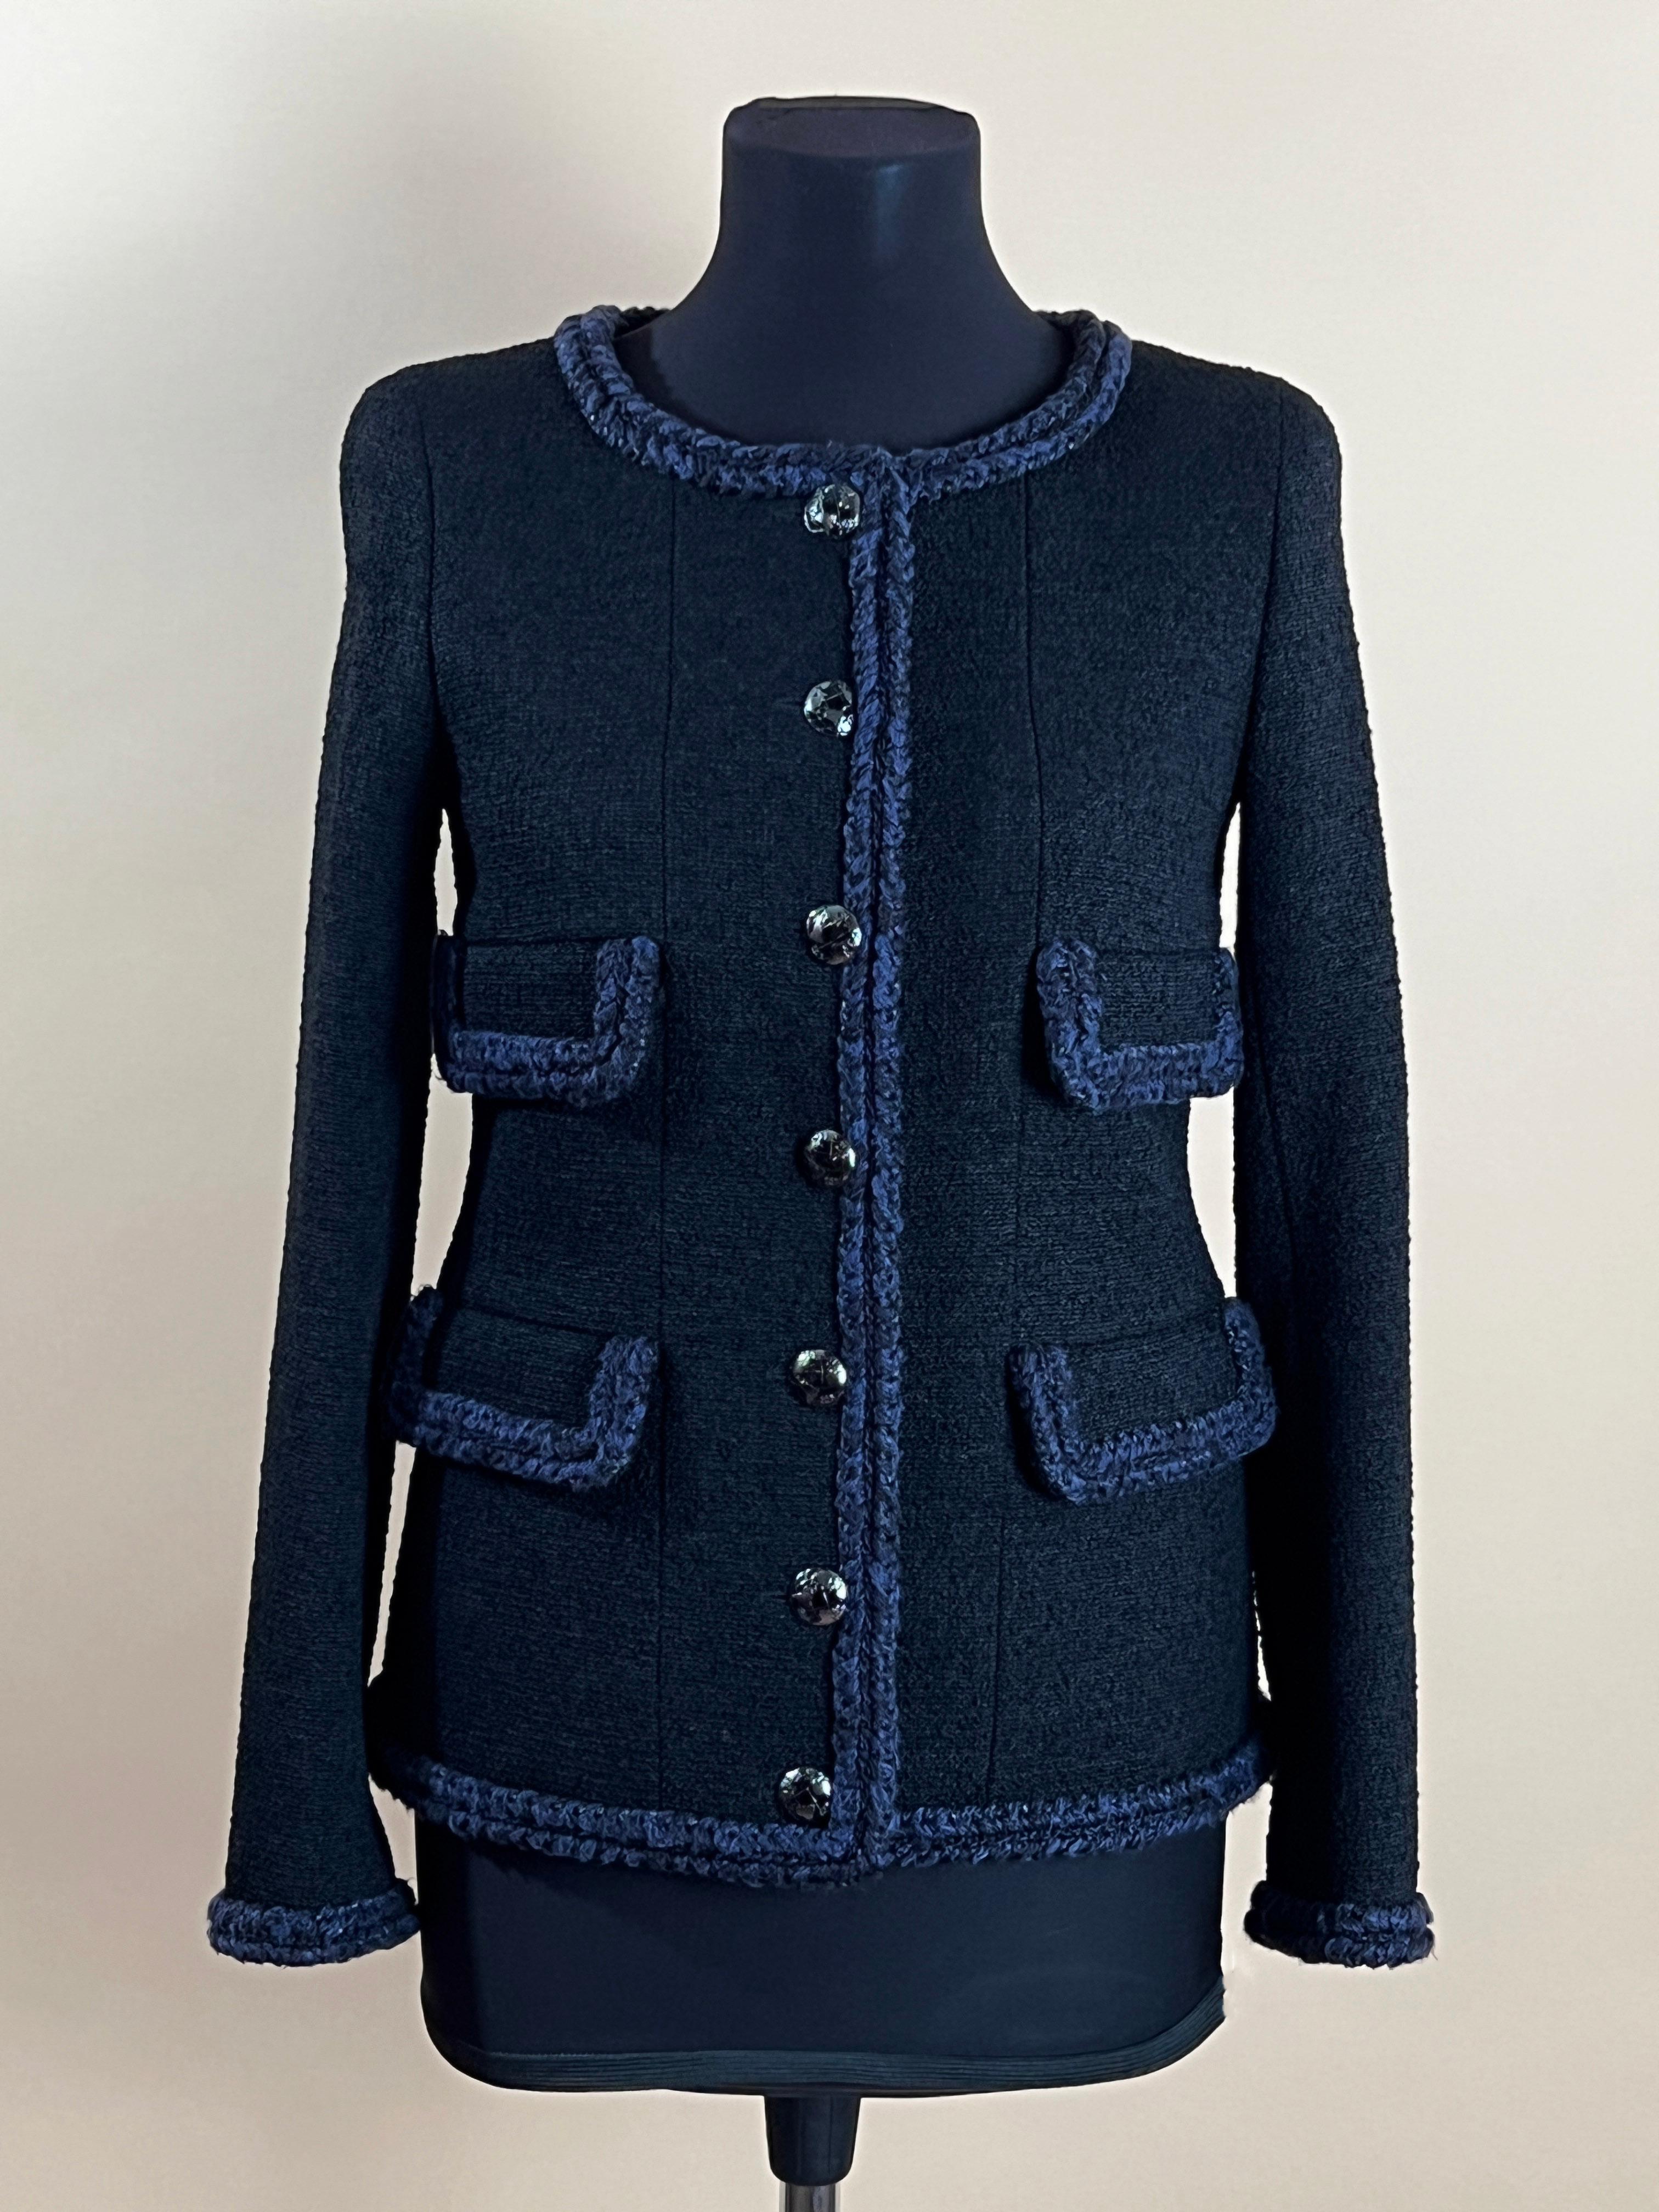 Chanel Most Iconic Globalization Black Tweed Jacket 4